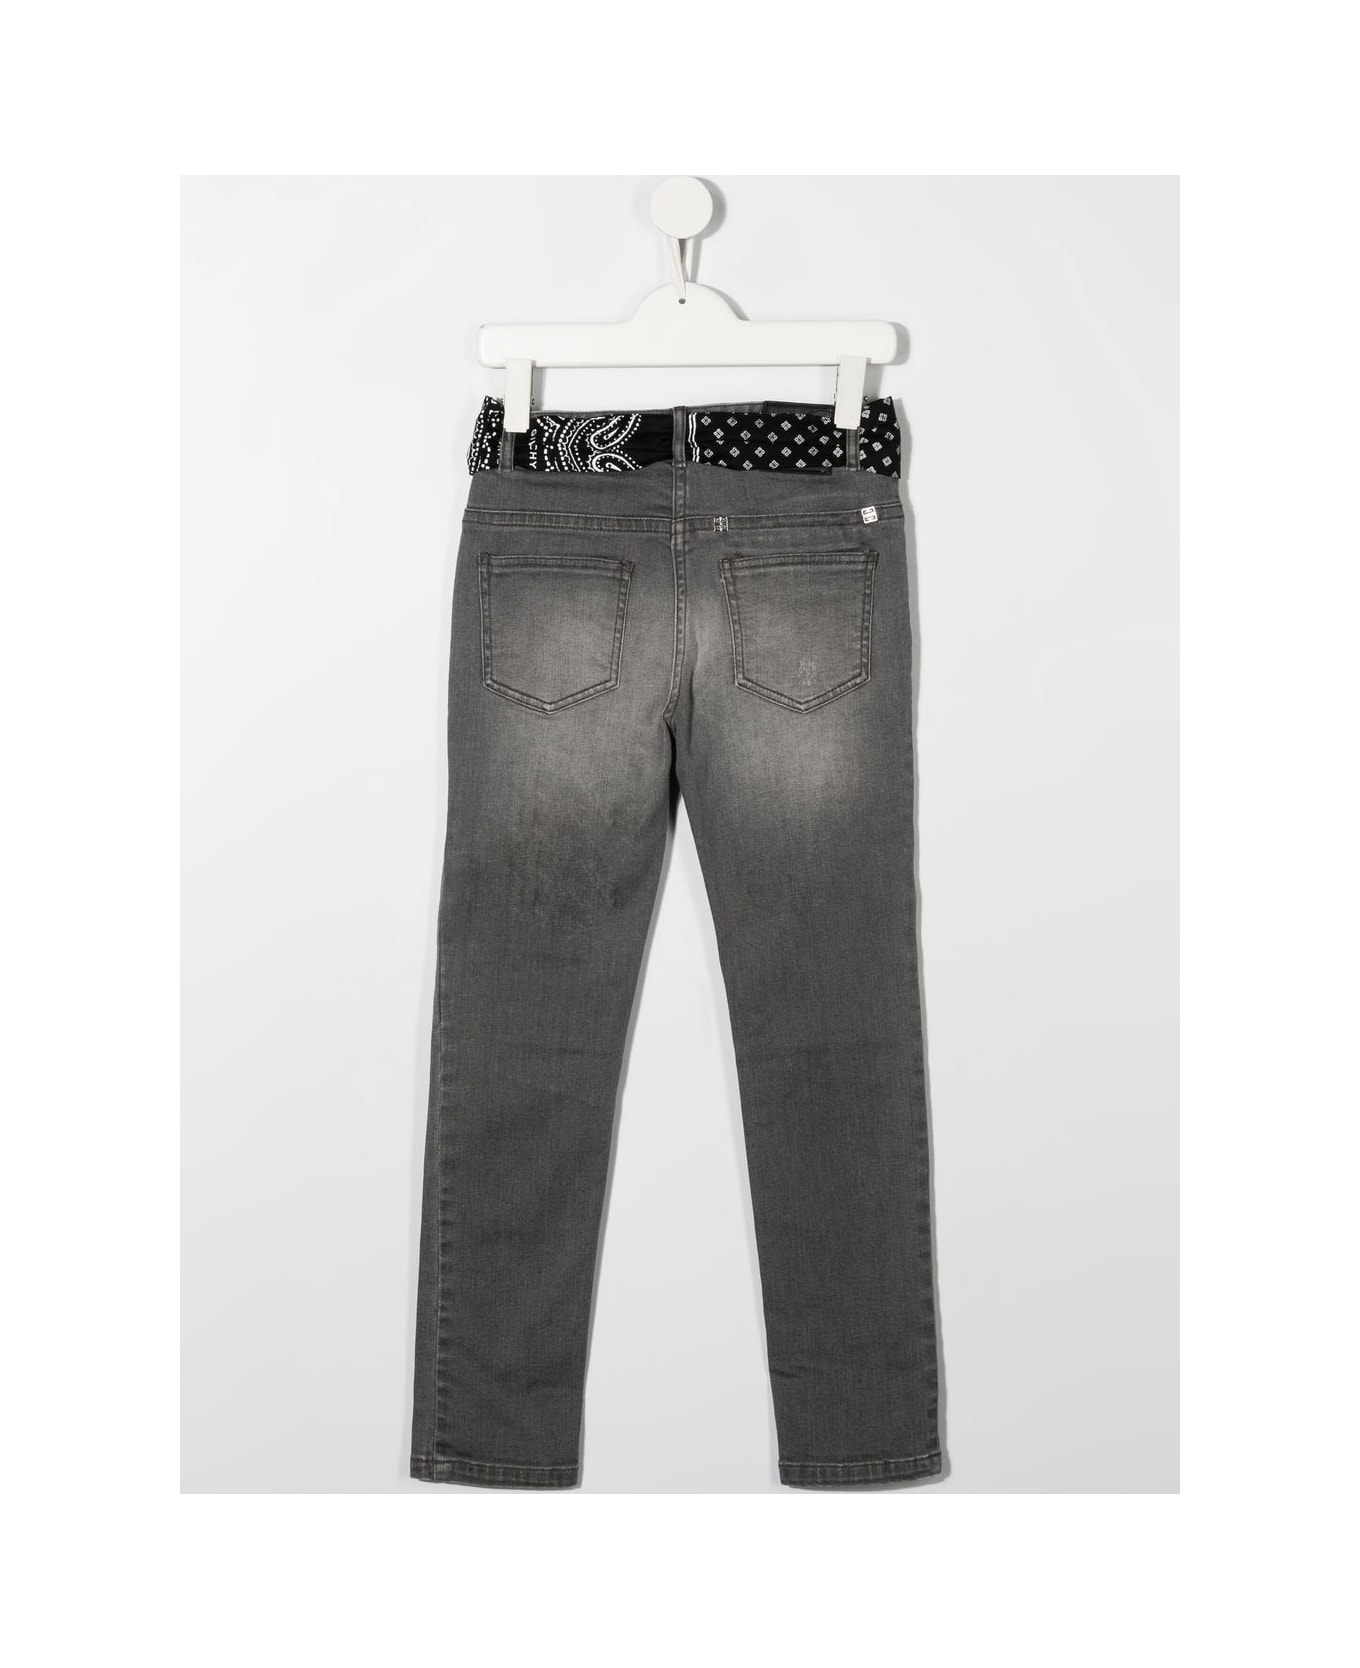 Givenchy Grey Cotton Jeans - Grigio